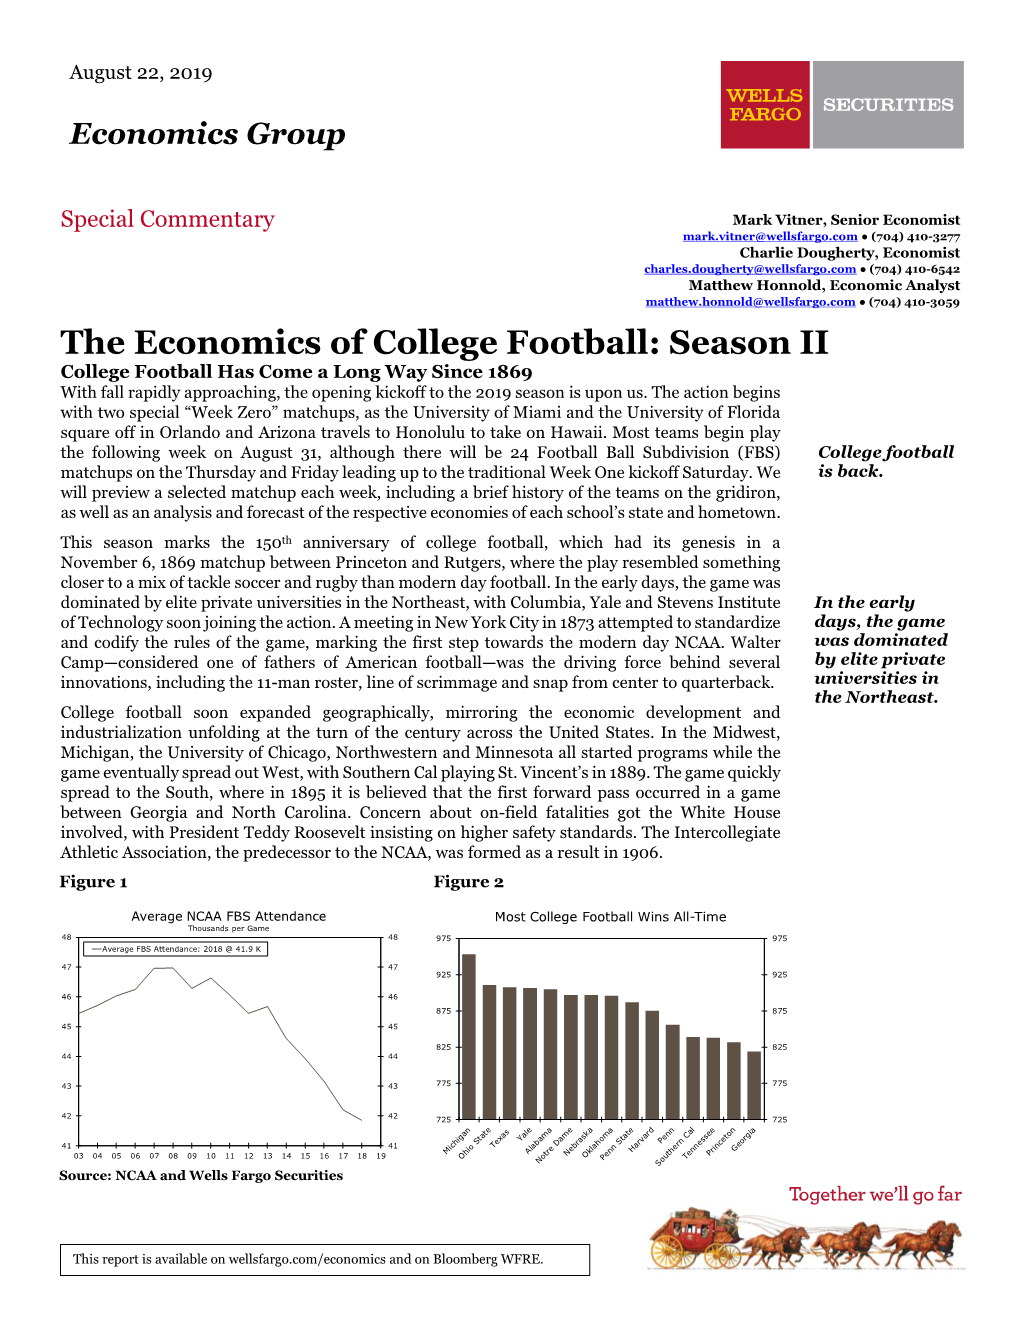 The Economics of College Football